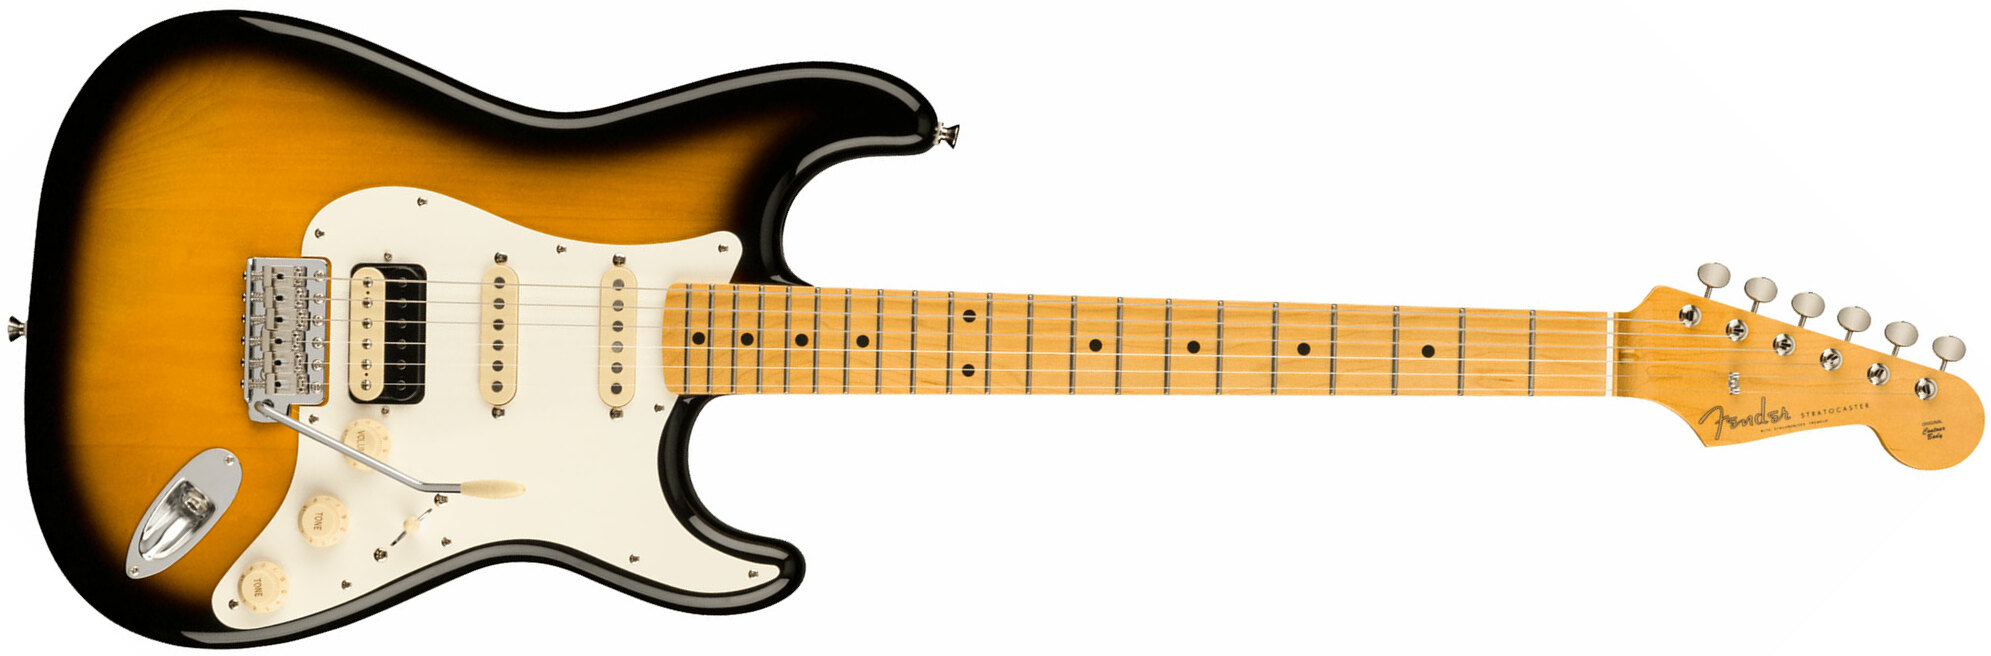 Fender Strat Jv Modified '50s Jap Hss Trem Mn - 2-color Sunburst - Str shape electric guitar - Main picture